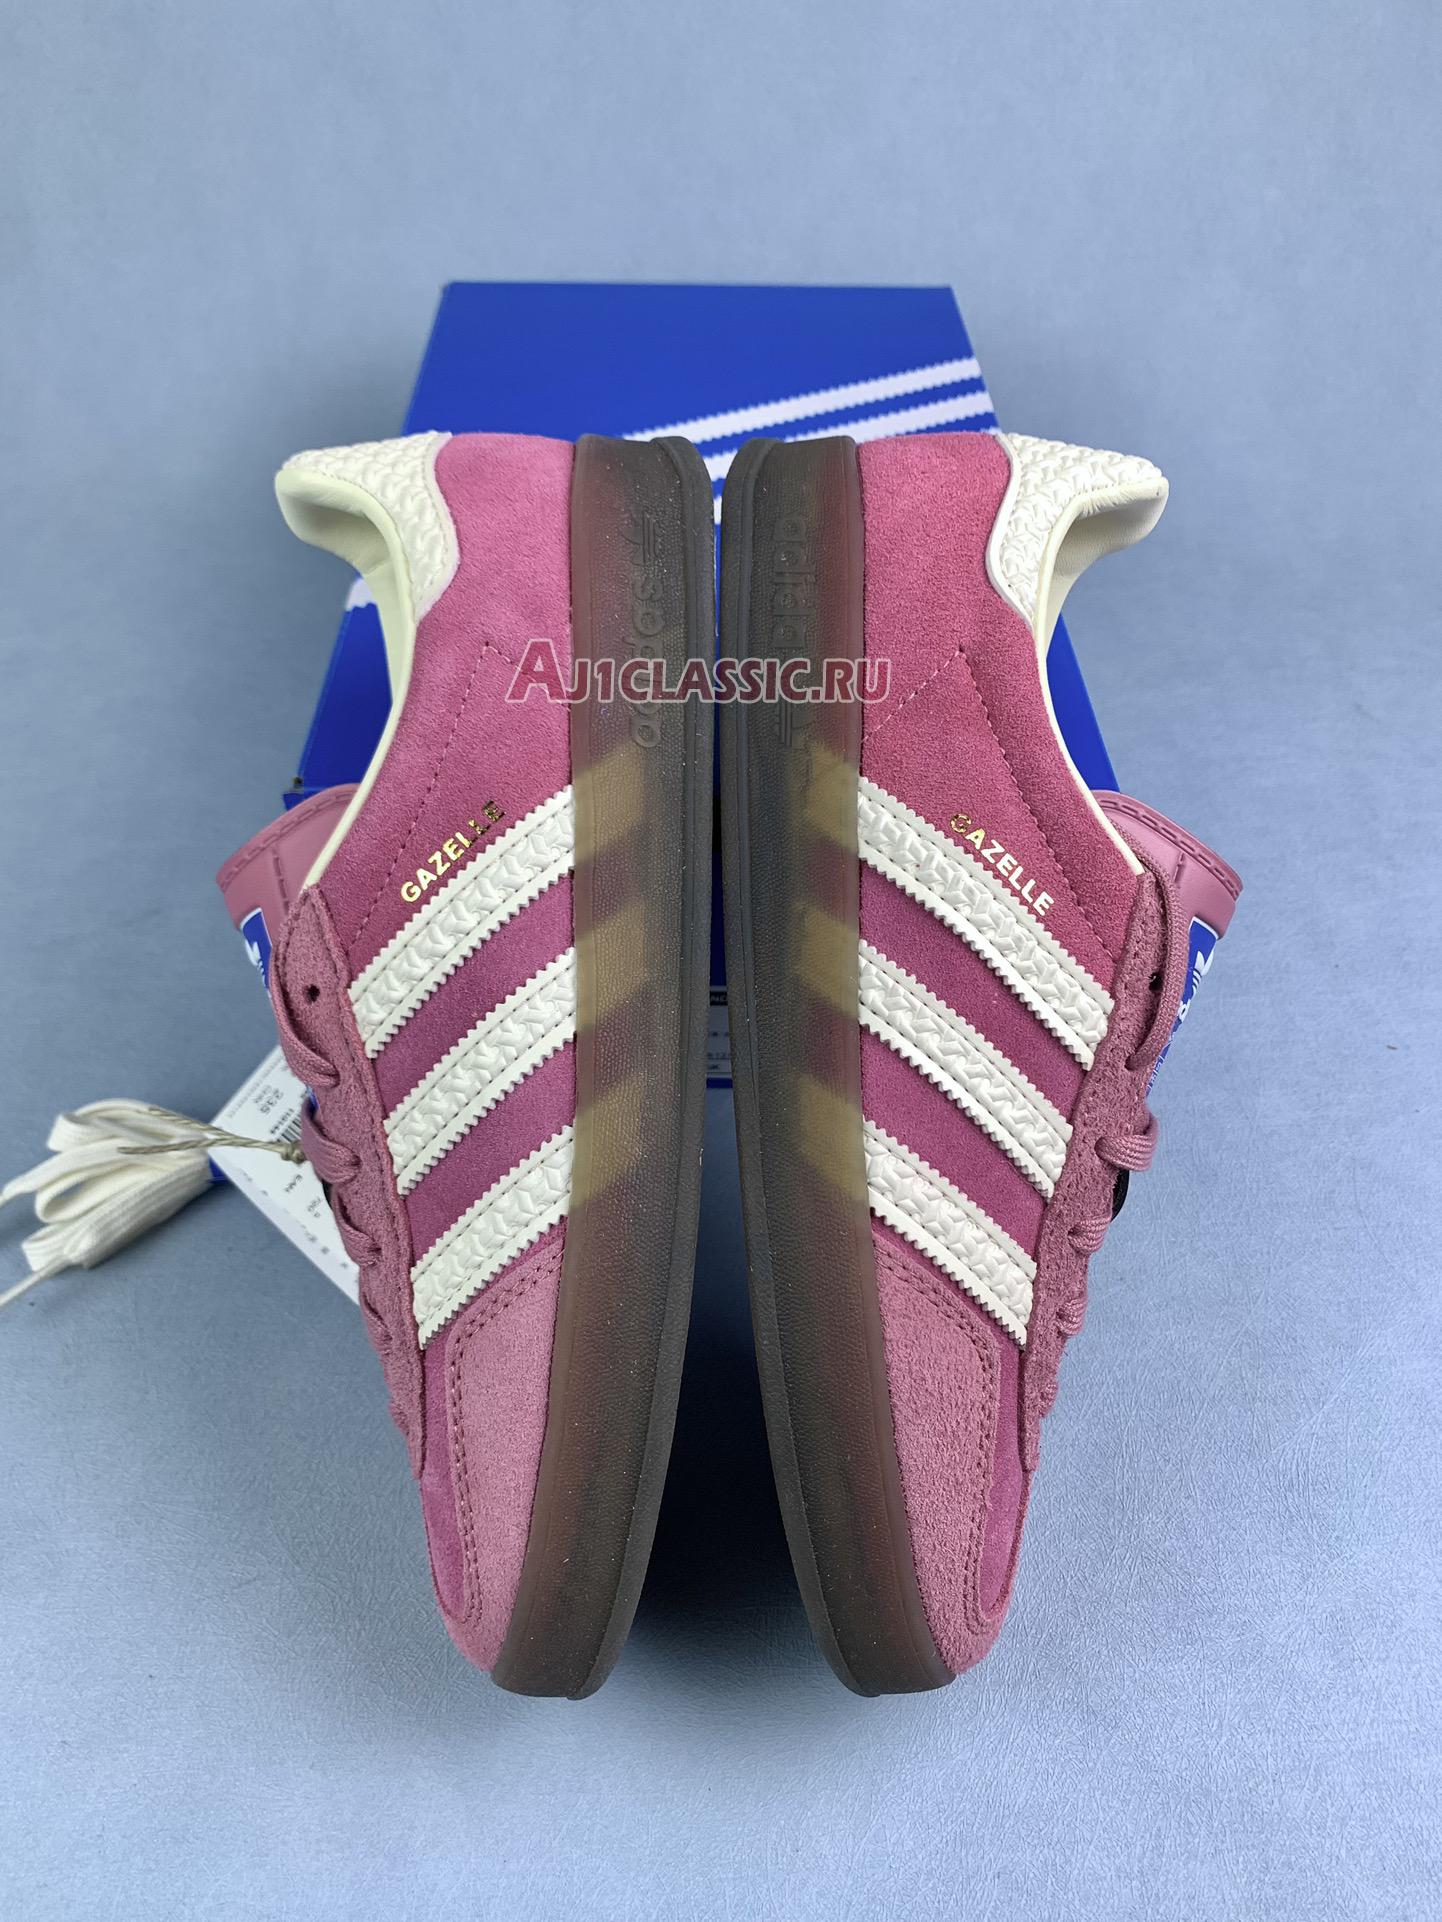 Adidas Gazelle Indoor "Almost Pink Gum" IF1809